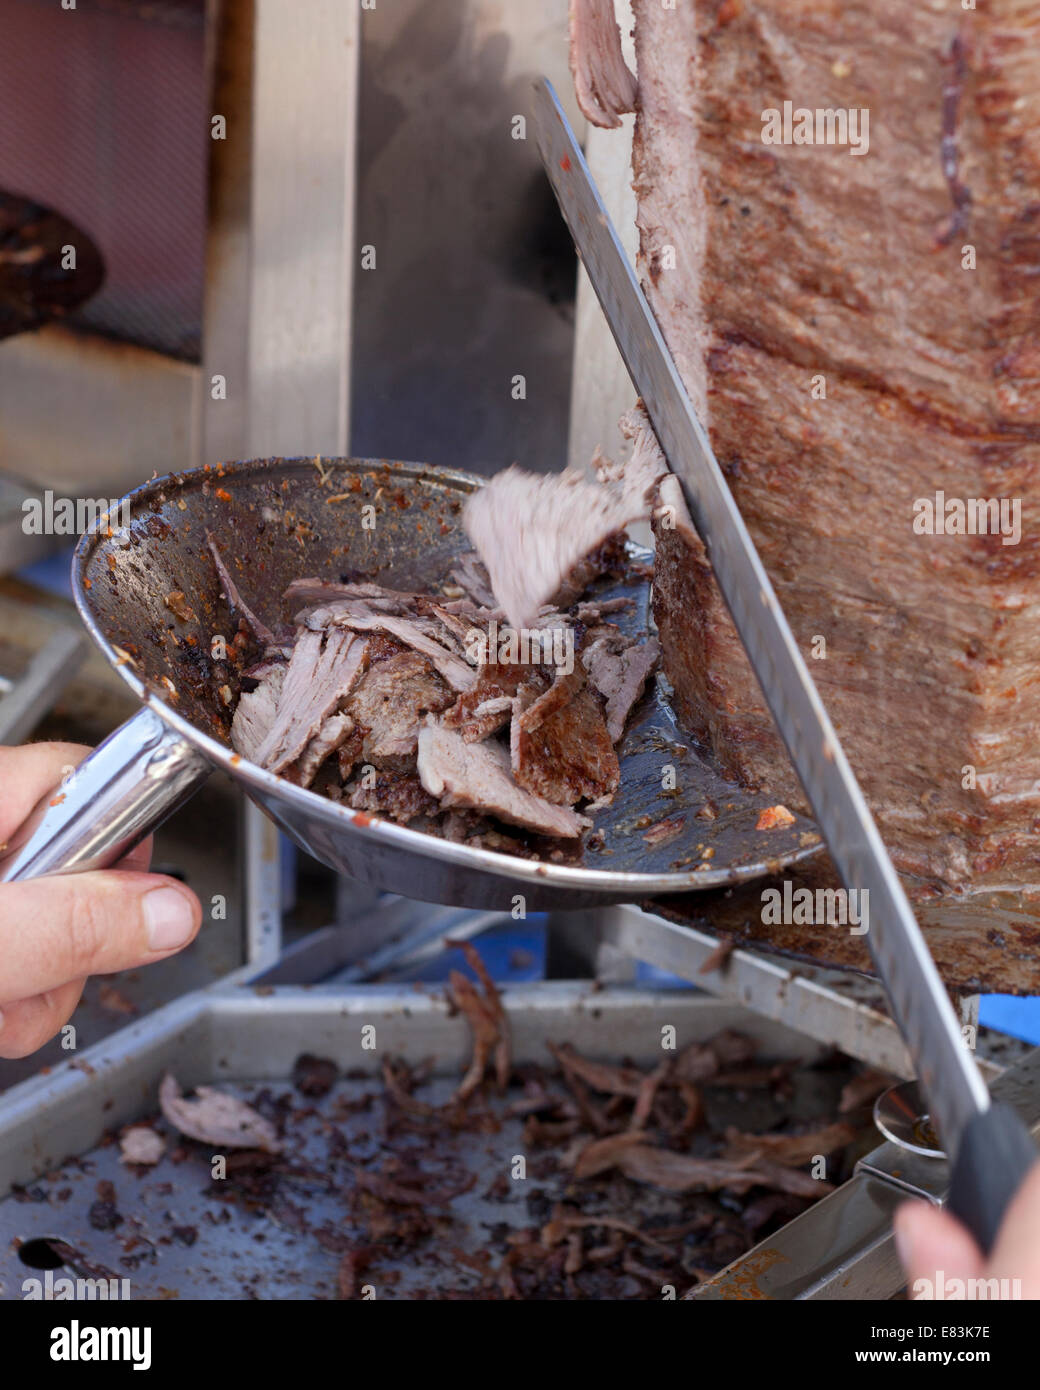 Cook slicing Doner kebab meat - USA Stock Photo